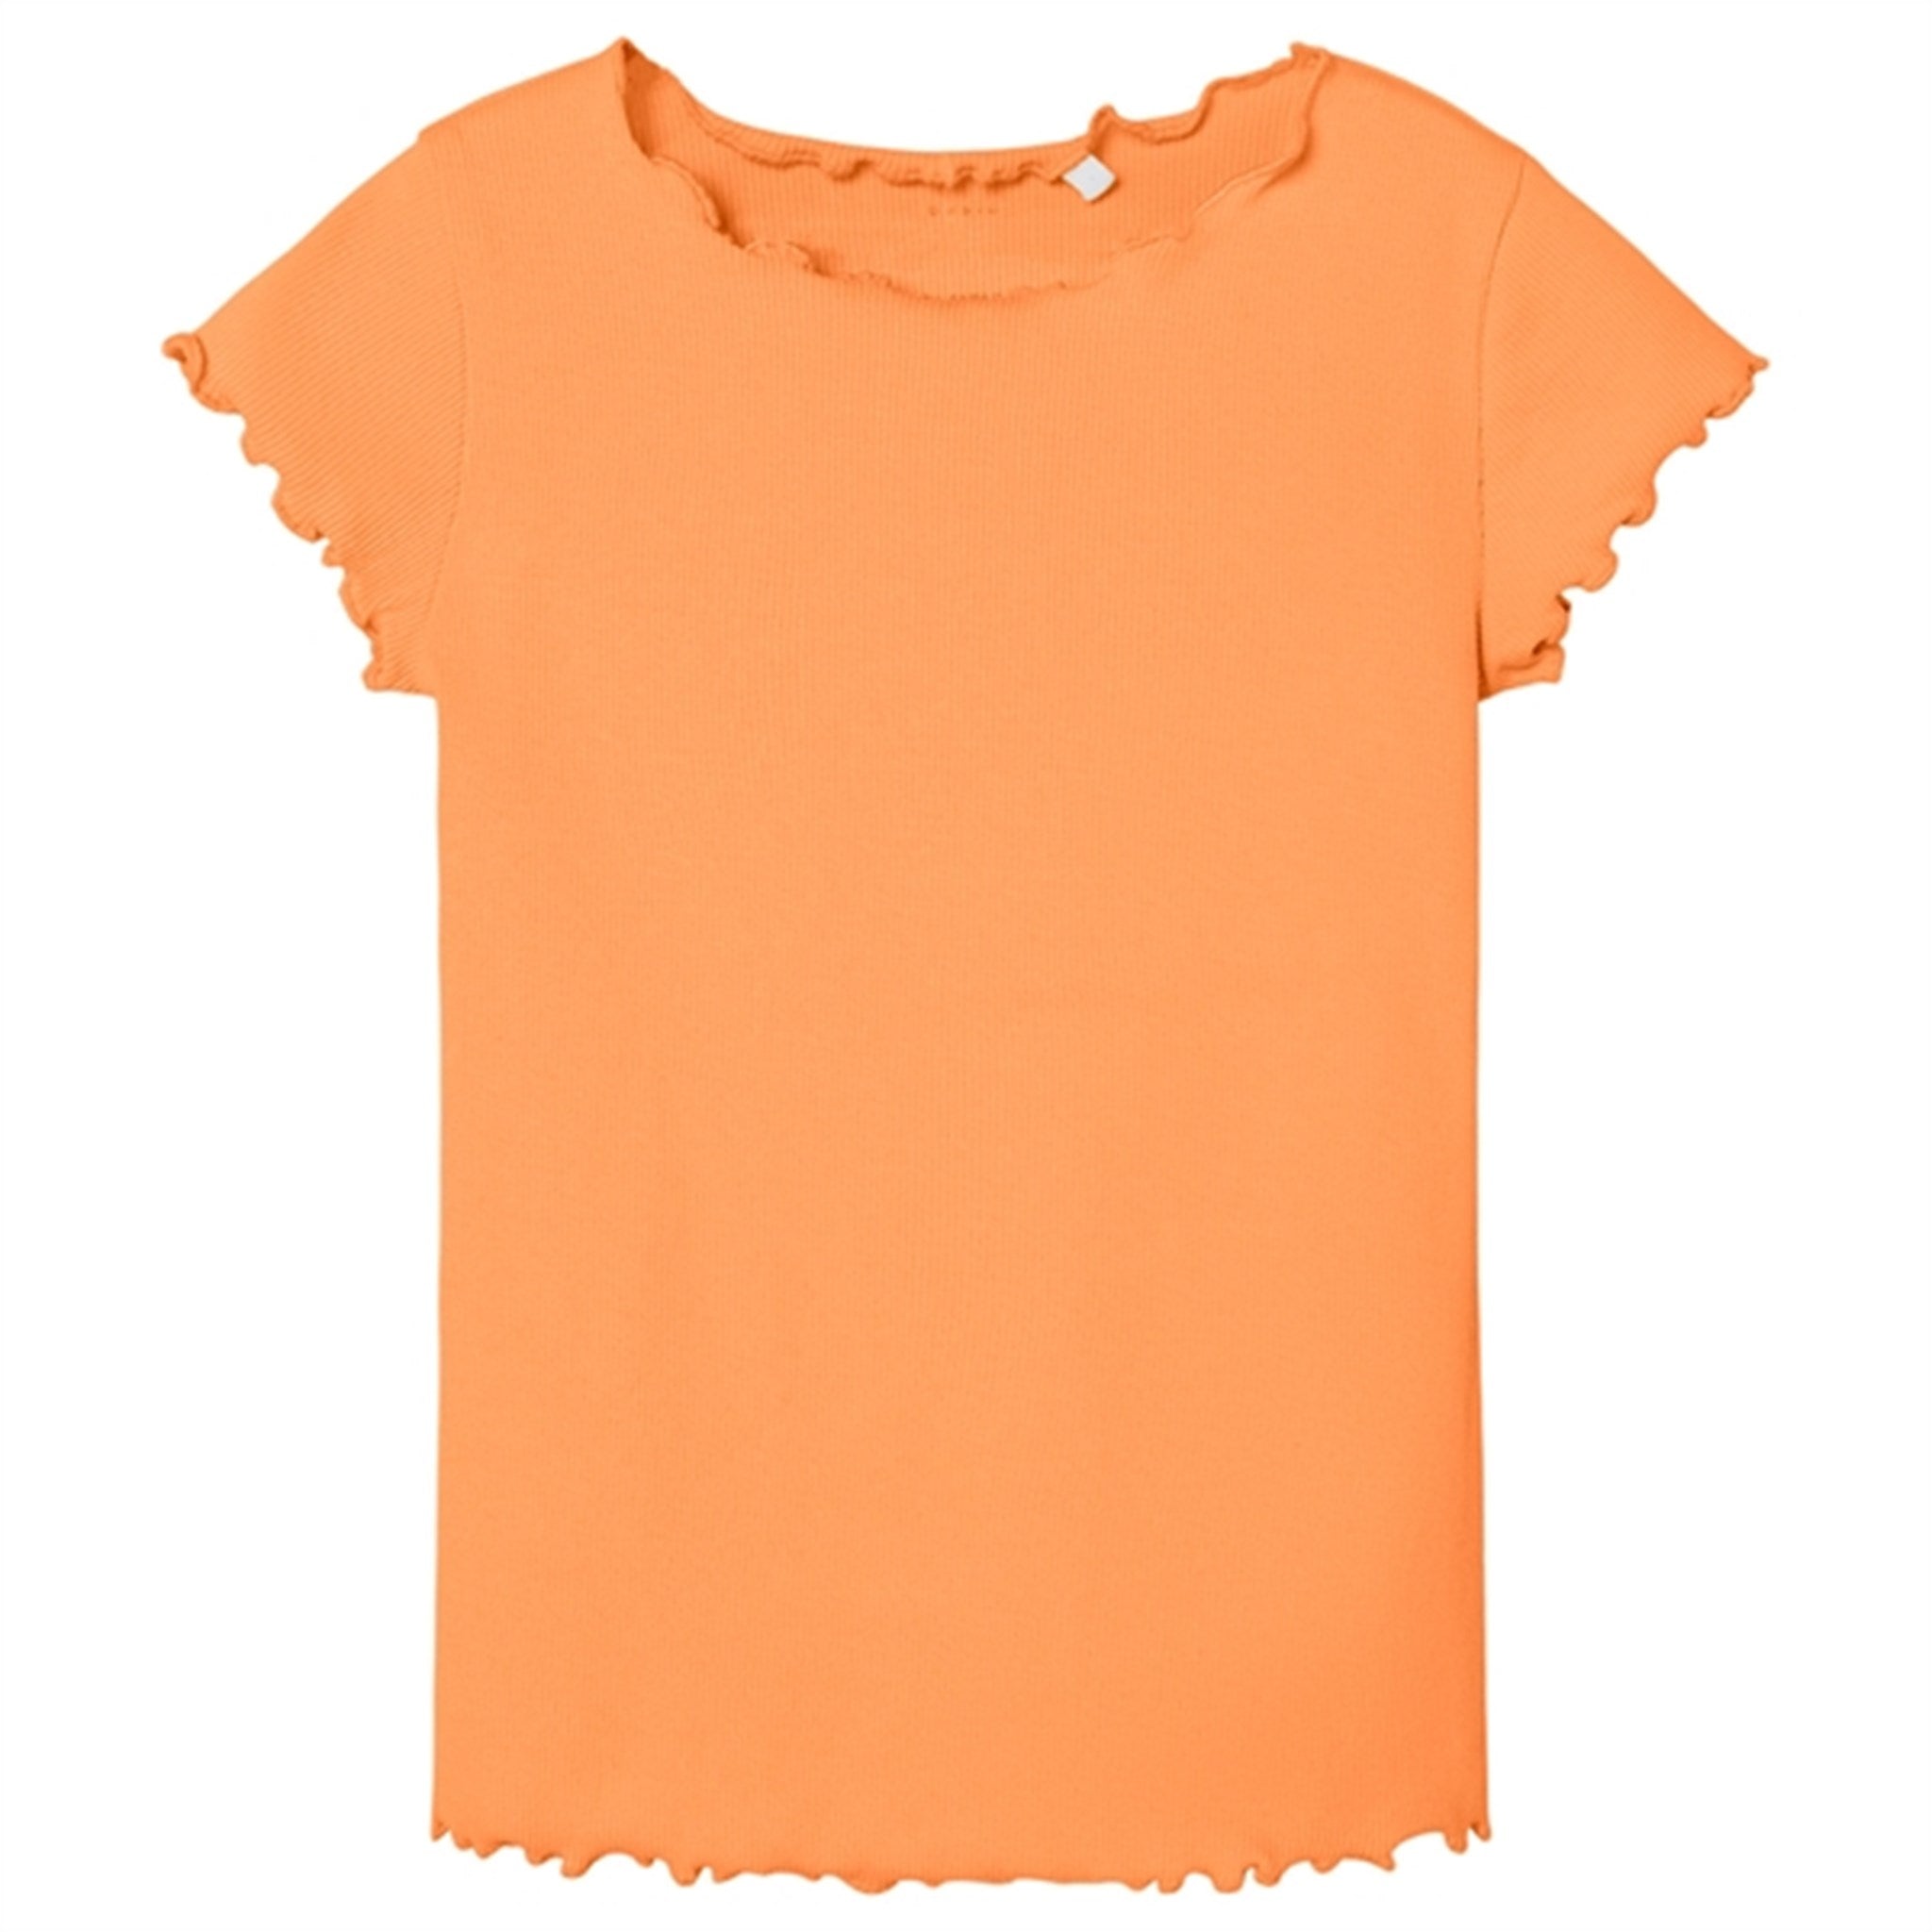 Name it Mock Orange Vemma Solid Slim T-Shirt